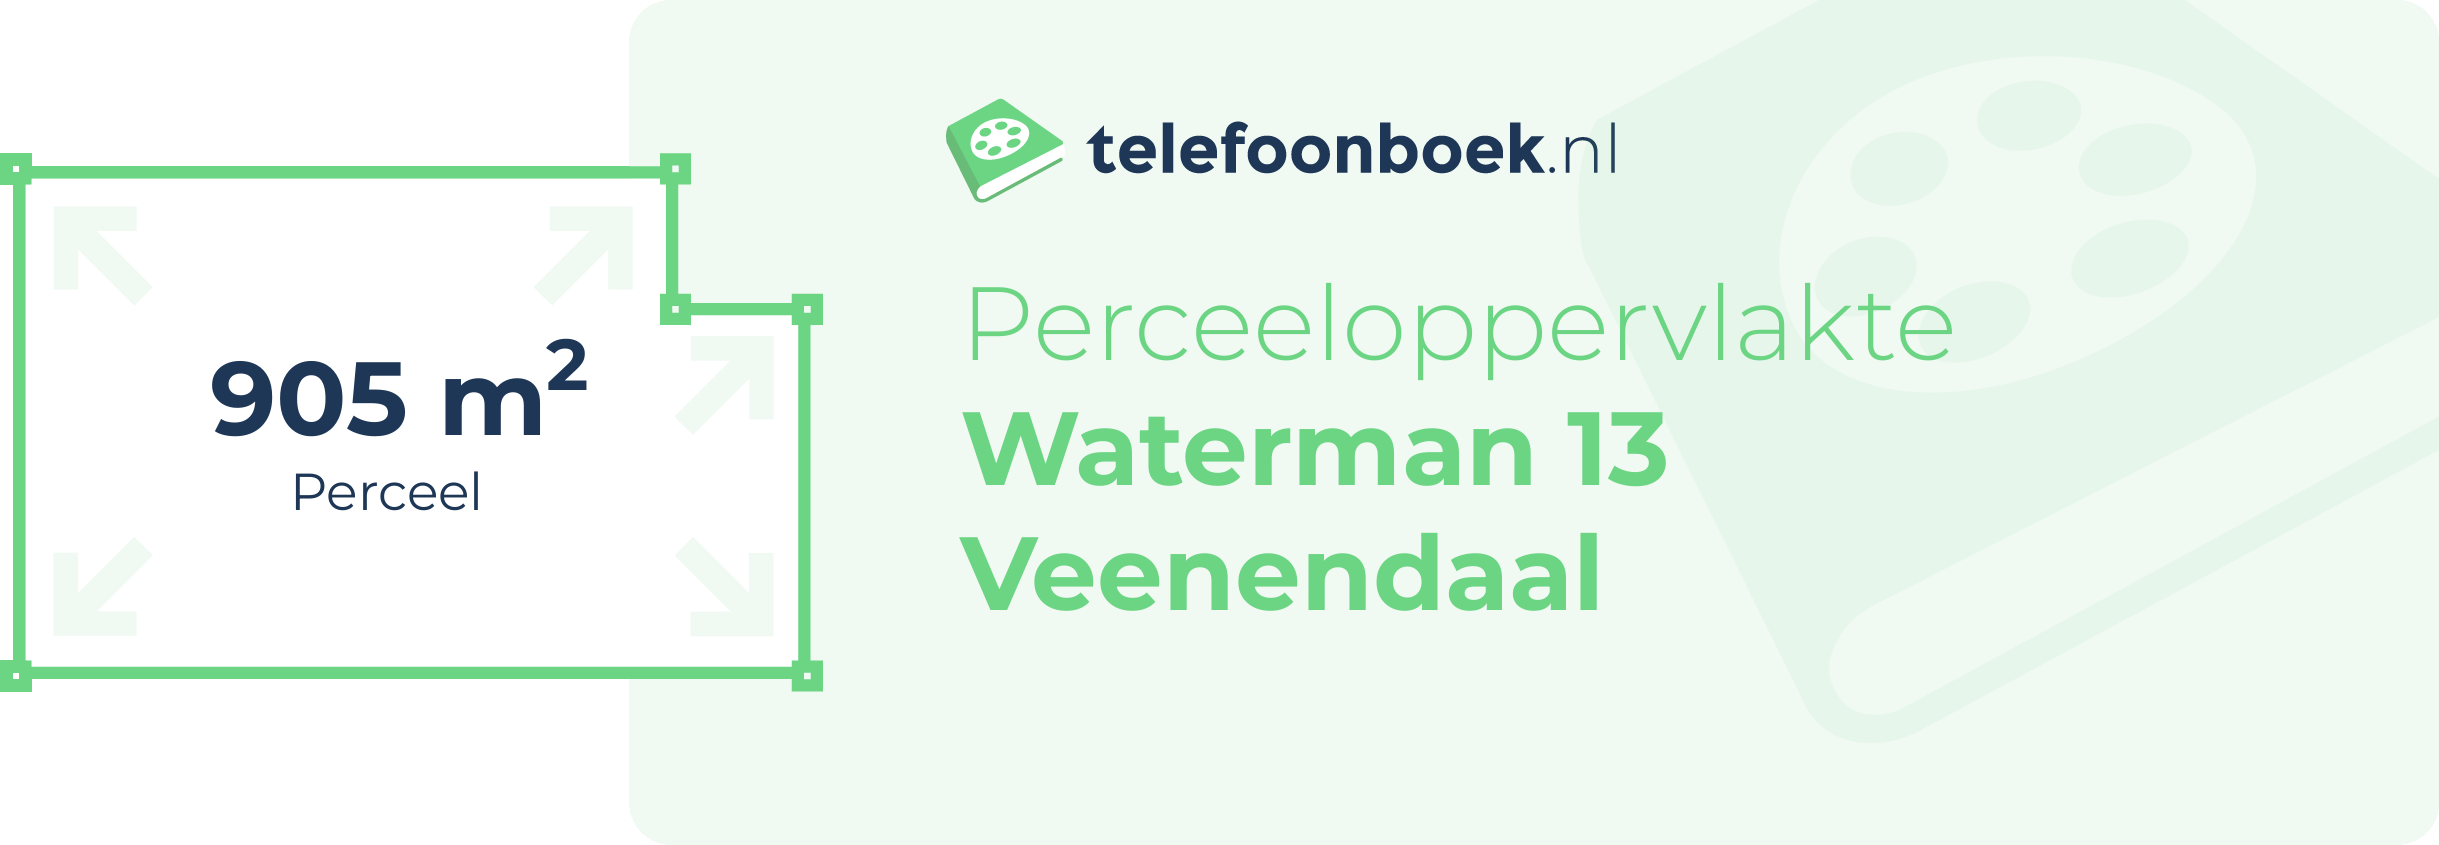 Perceeloppervlakte Waterman 13 Veenendaal